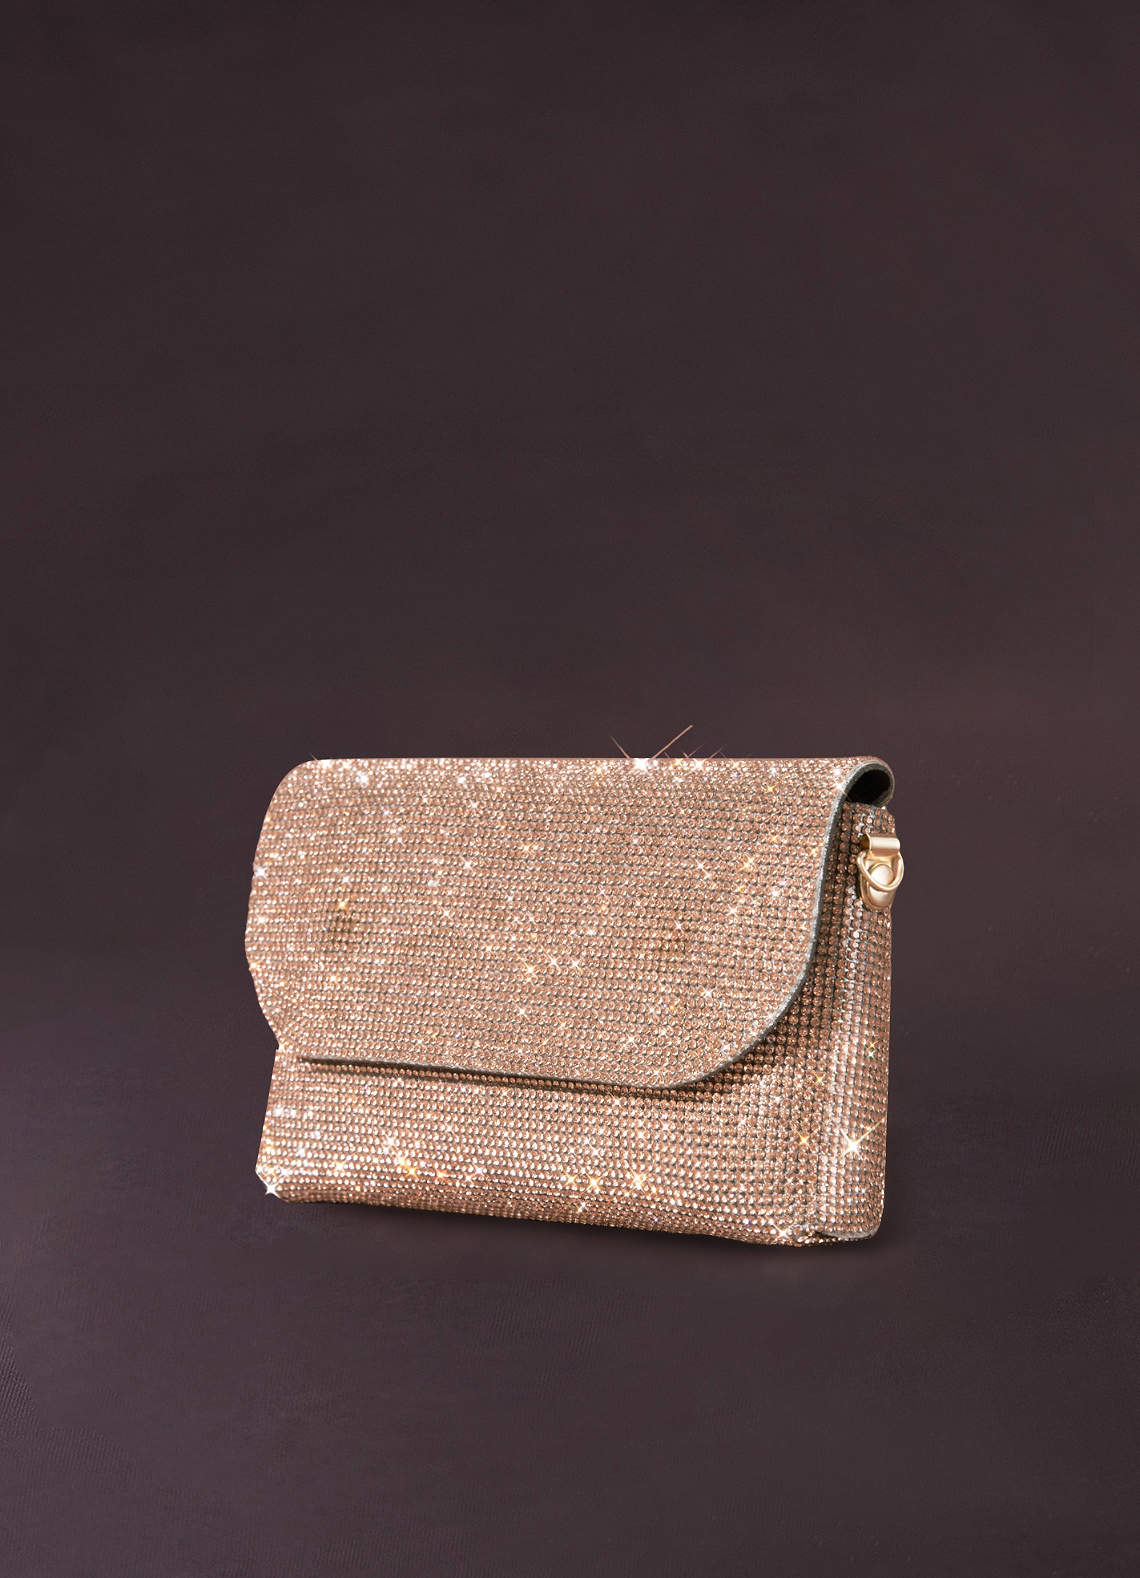 Unique Beaded Evening Clutch Bag - Golden Stars Align | NOVICA